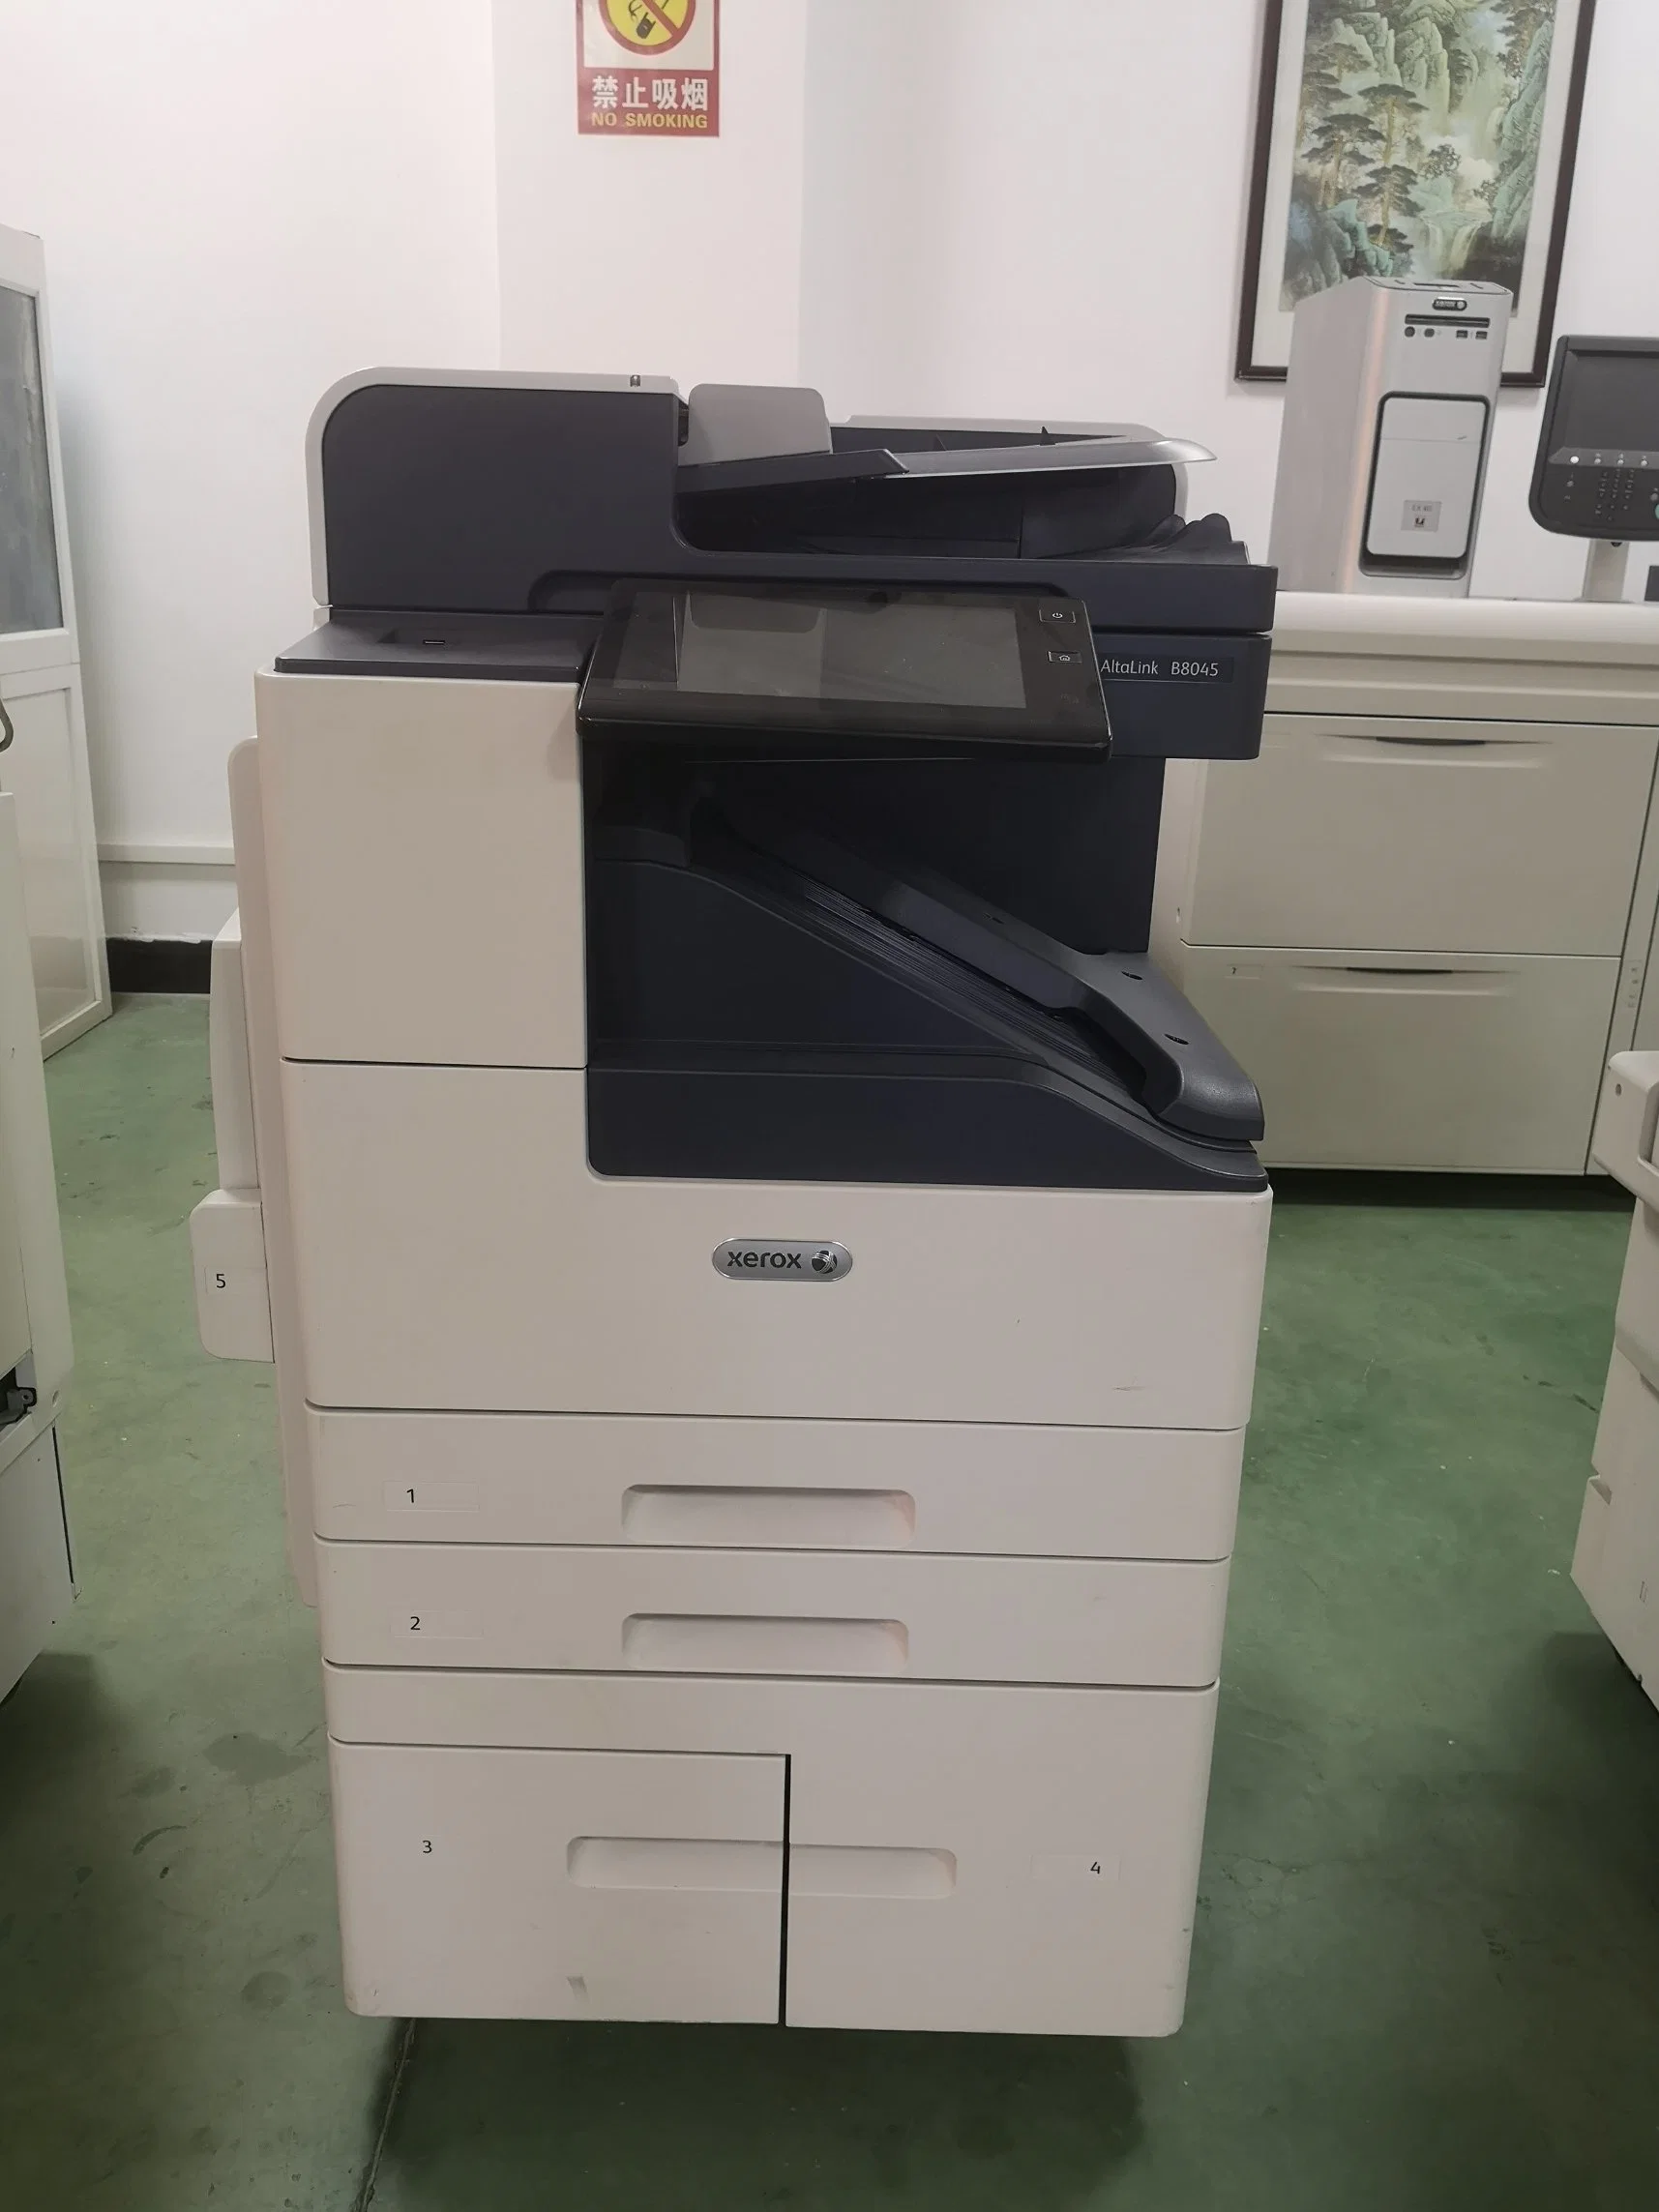 Tohita Impressora multifunções a cores A3 A4 copiadora de papel para Xerox Impressora Altalink B8045 B8055 B8065 B8075 B8090 Color impressora multifunções